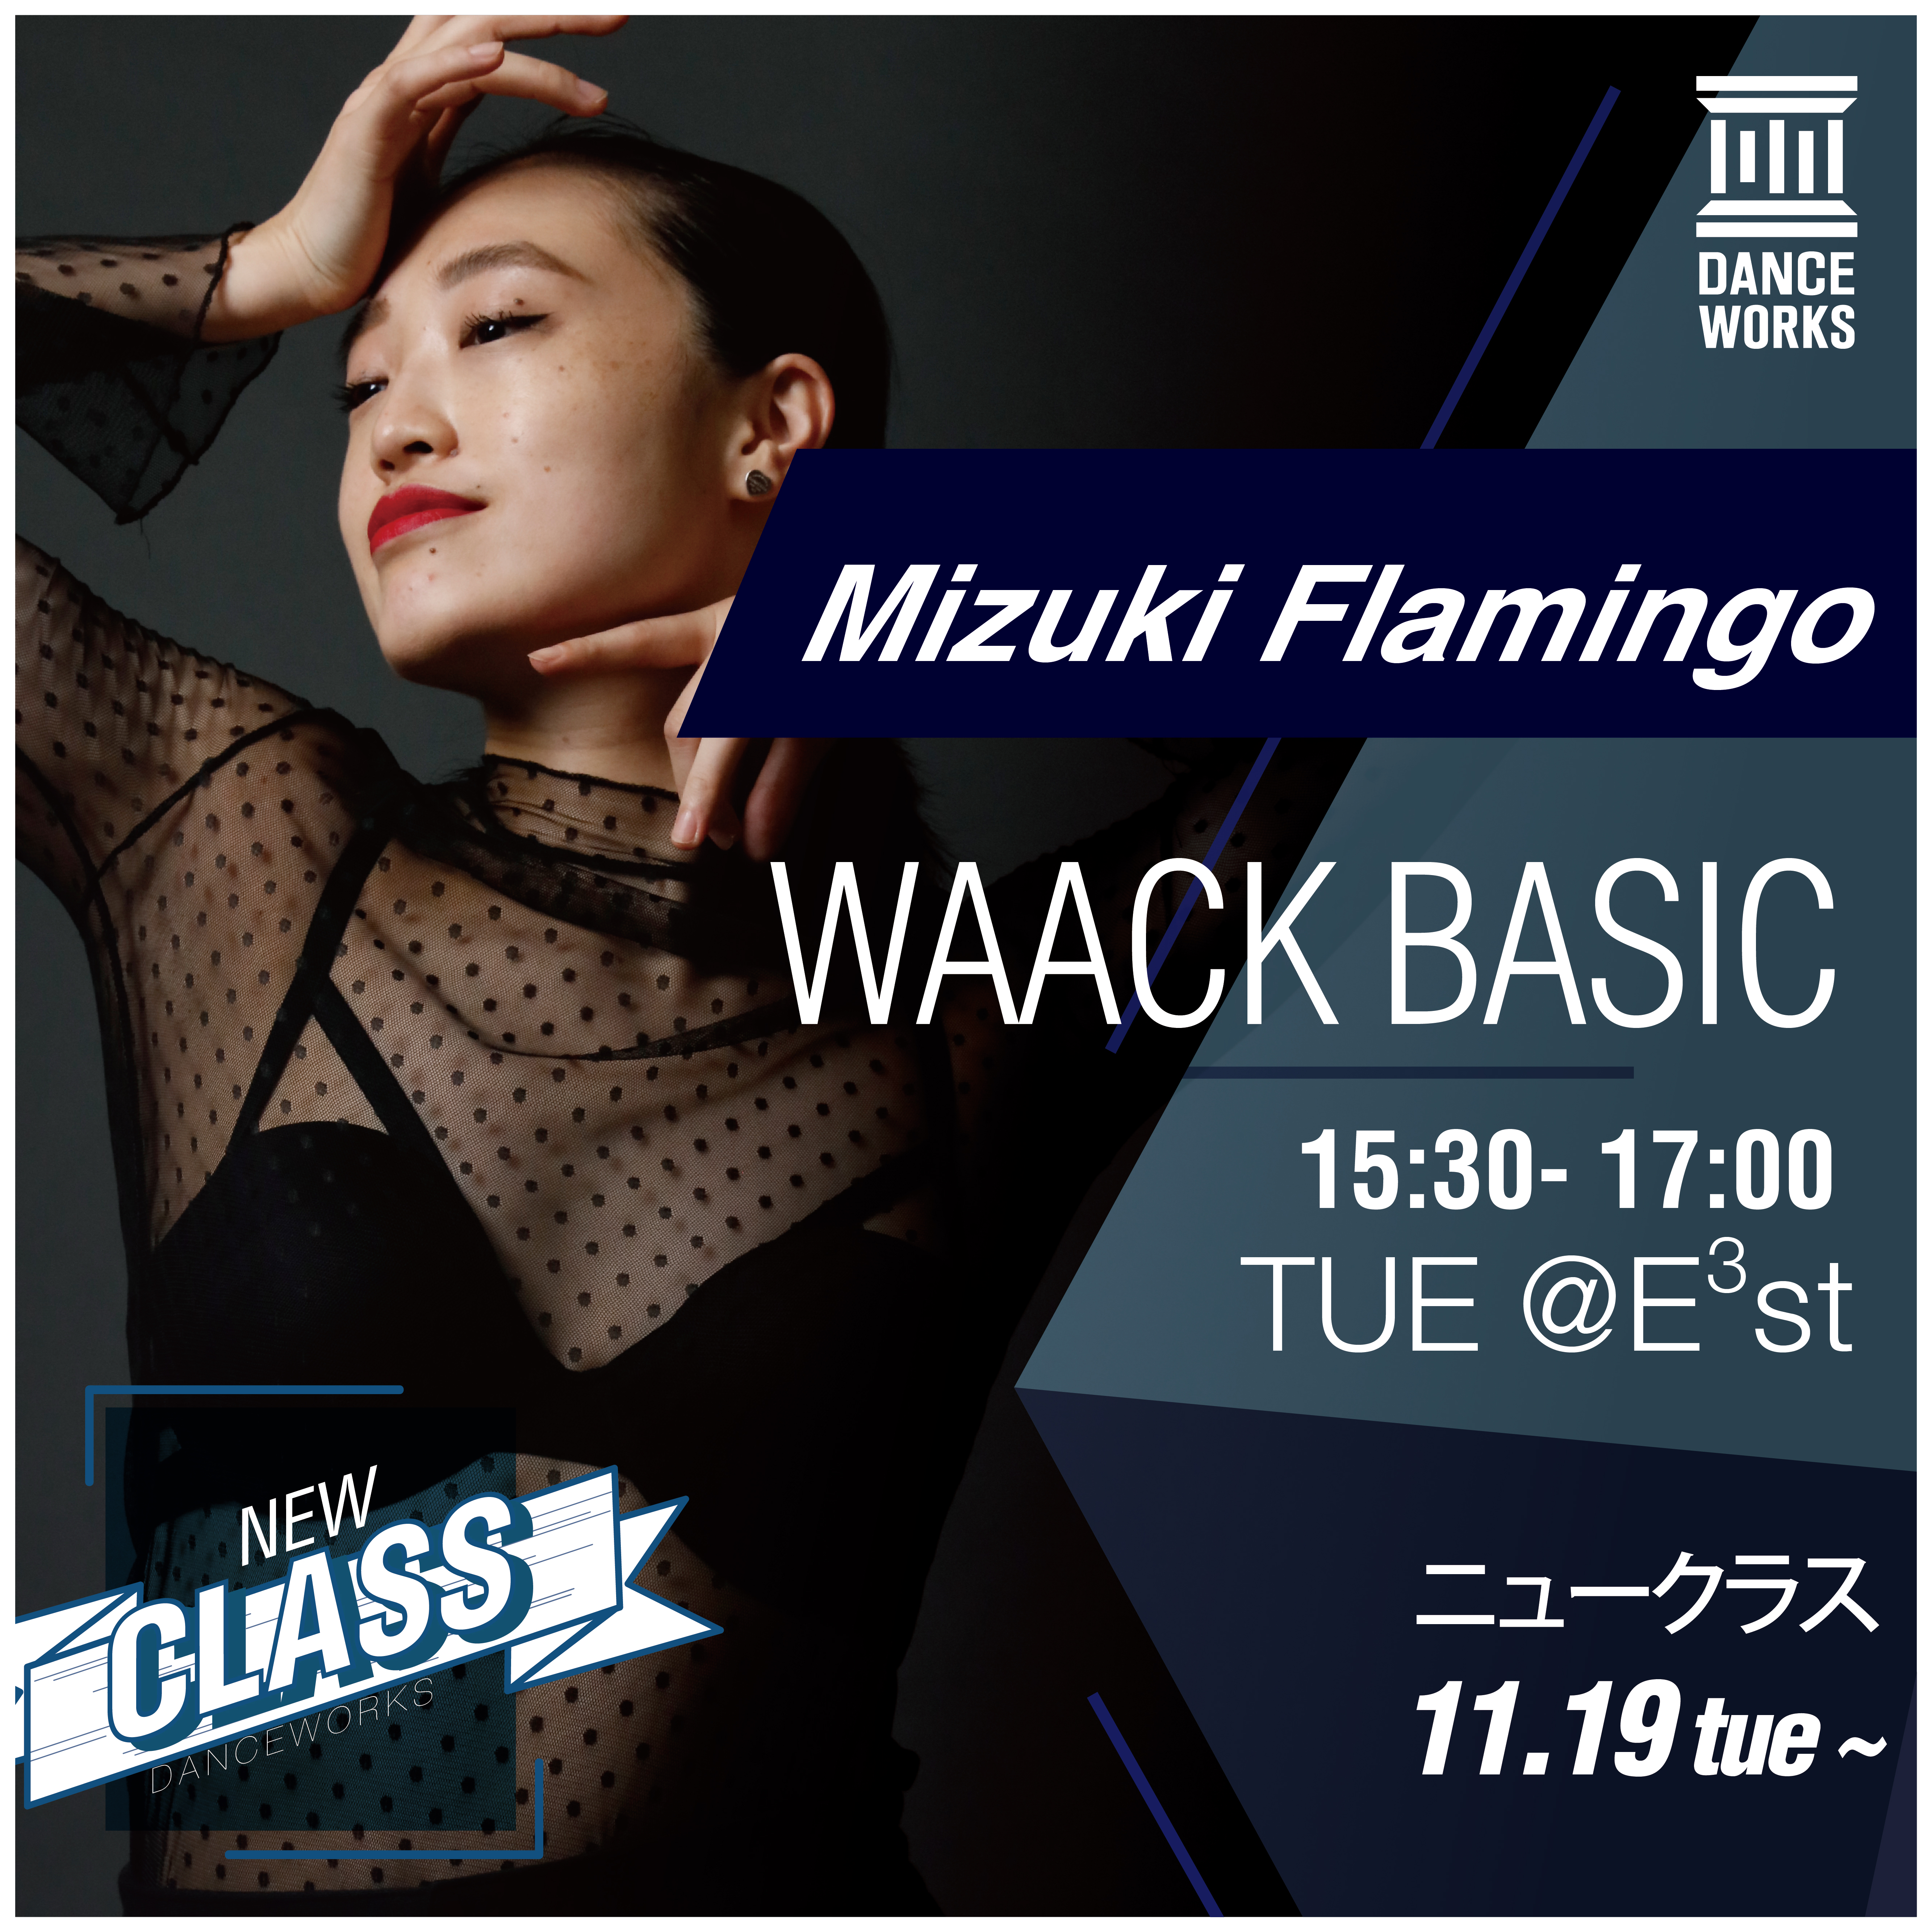 Dance Works、Mizuki Flamingo氏による「WAACK BASIC」クラスを開講